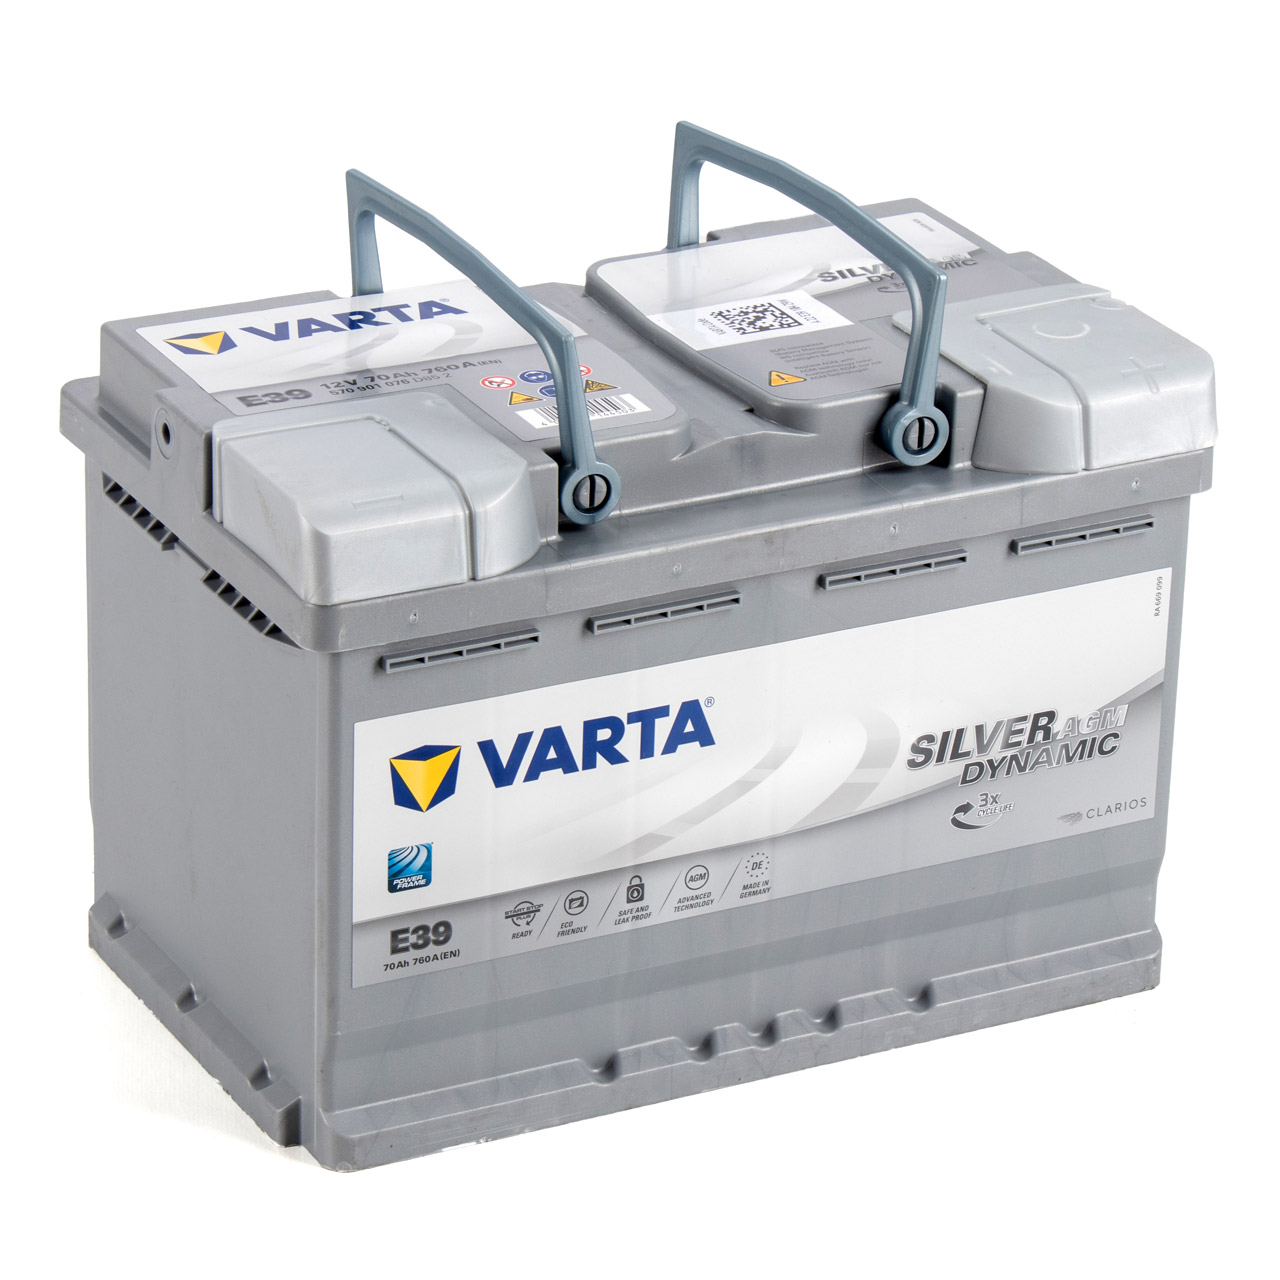 VARTA E39 SILVER dynamic AGM Autobatterie Starterbatterie 12V 70Ah EN760A